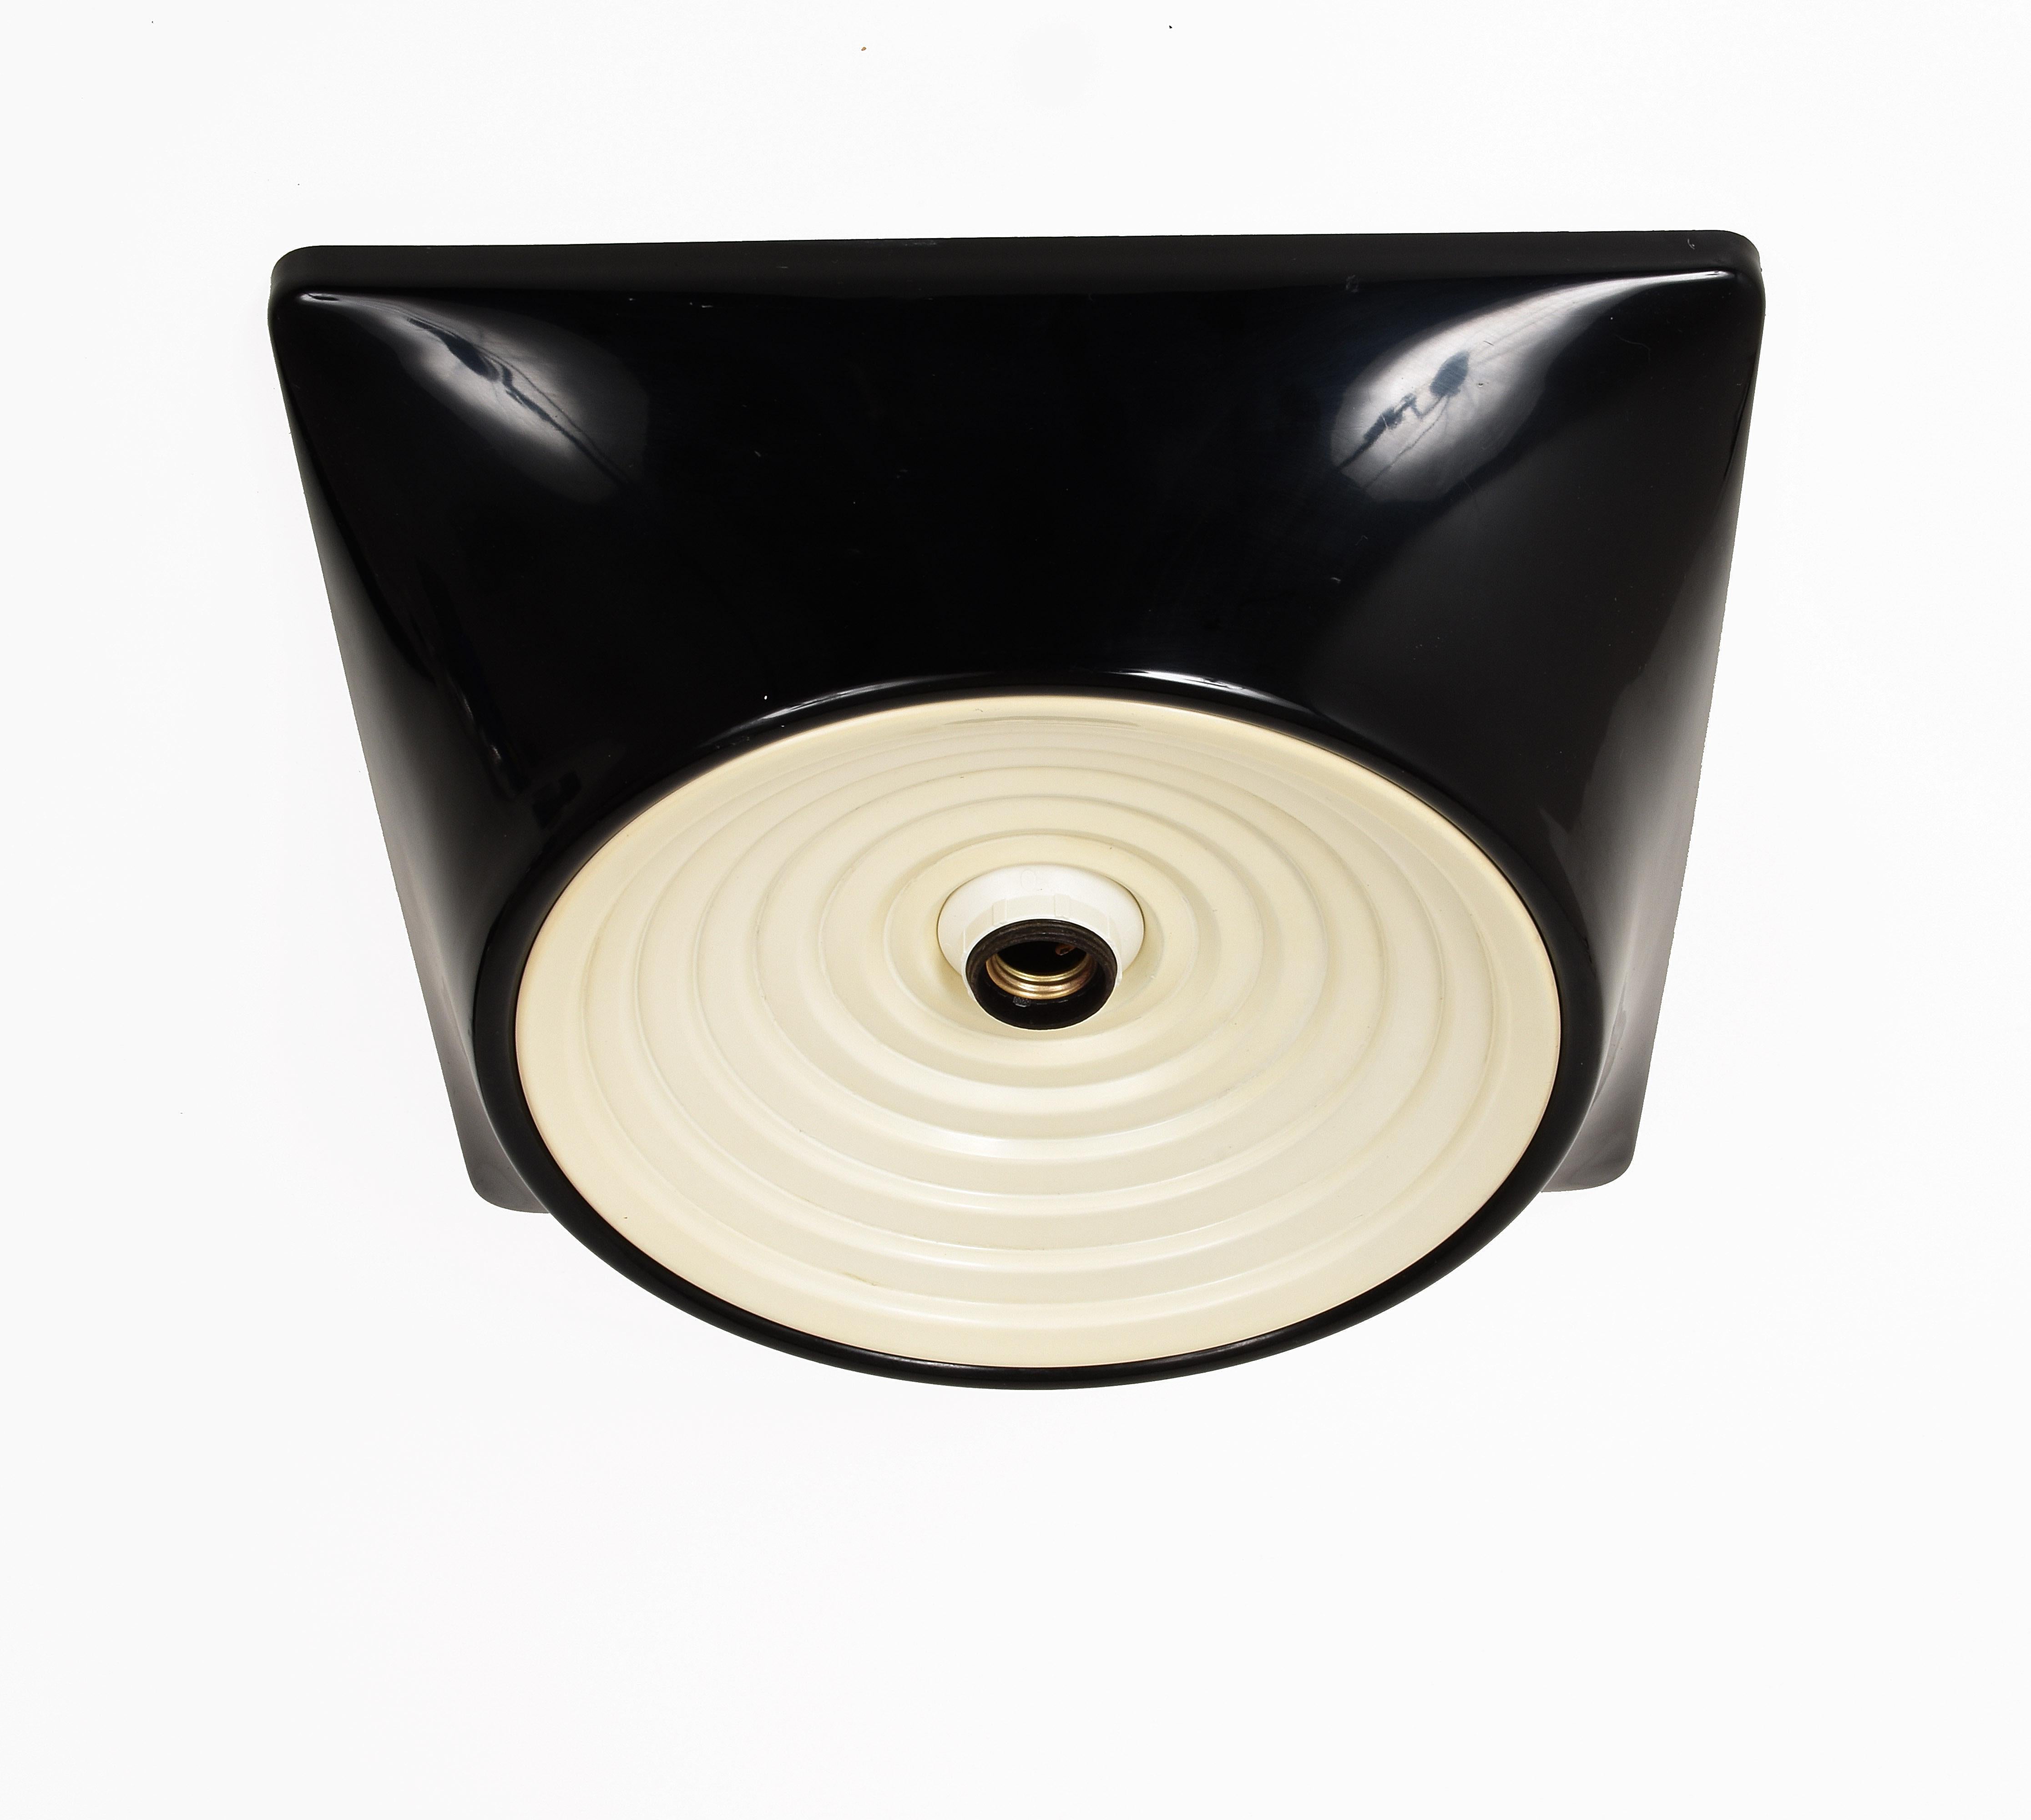 Ceiling light model 1369
designed by Studio Nizzoli Associati
for Stilnovo in 1969.
Resin printed support
of color black.
Reflective disc
in white metal.
Relief marking
